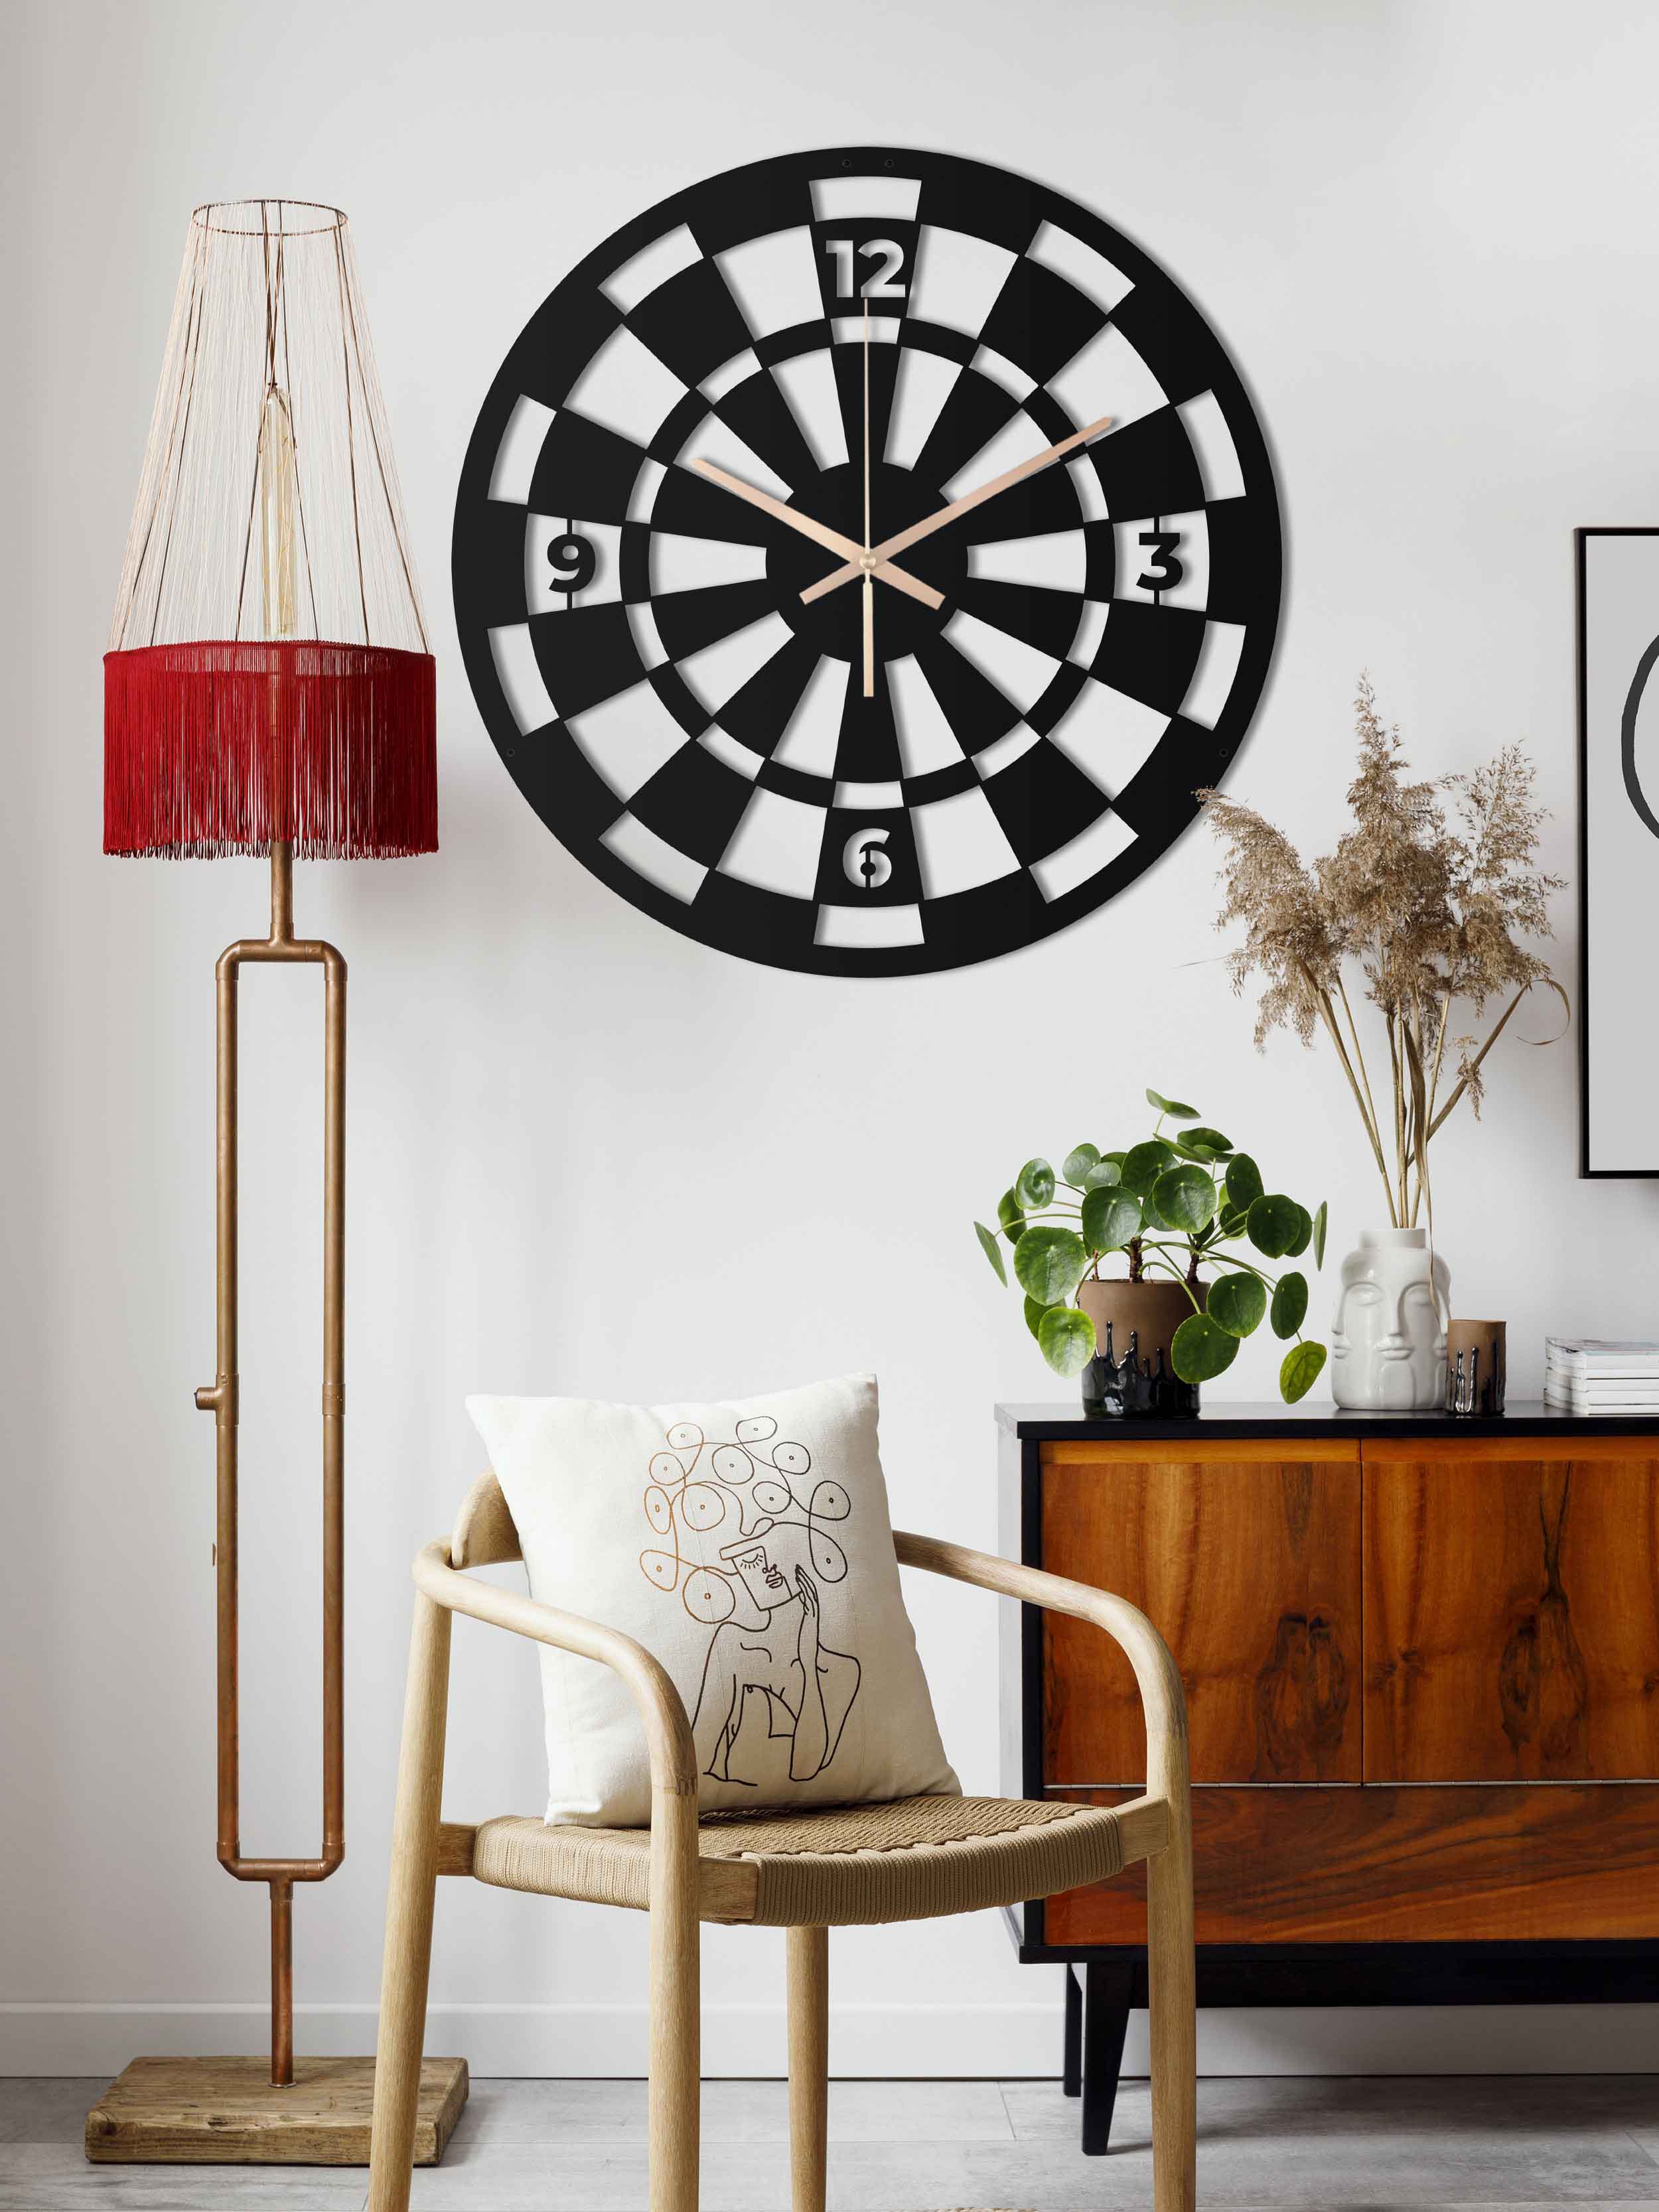 Darts Clock, Decorative Wall Clock, Oversized Wall Clock, Game Room Metal Wall Clock, Small Wall Clock, Unique Wall Clock, Clocks For Wall